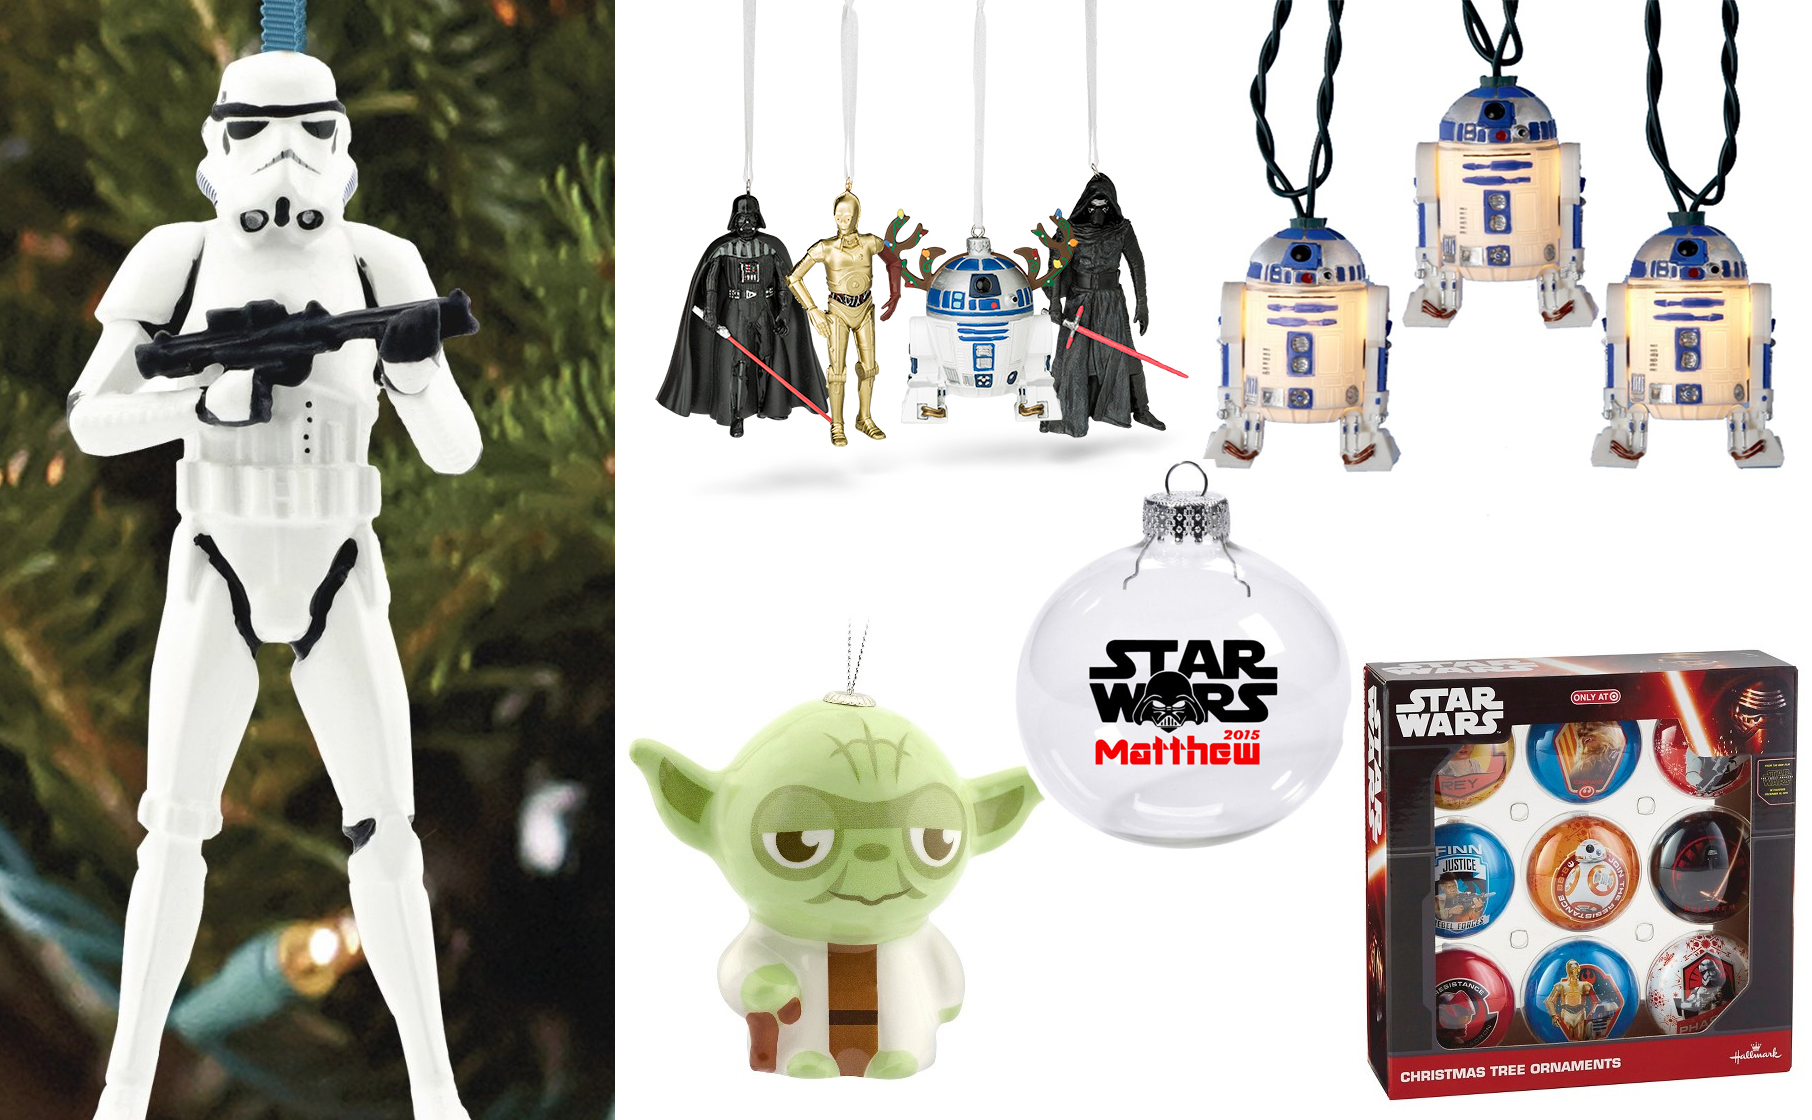 Yoda BB8 R2D2 Star Wars Christmas Ornaments by Hallmark KyloRen Darth Vader 